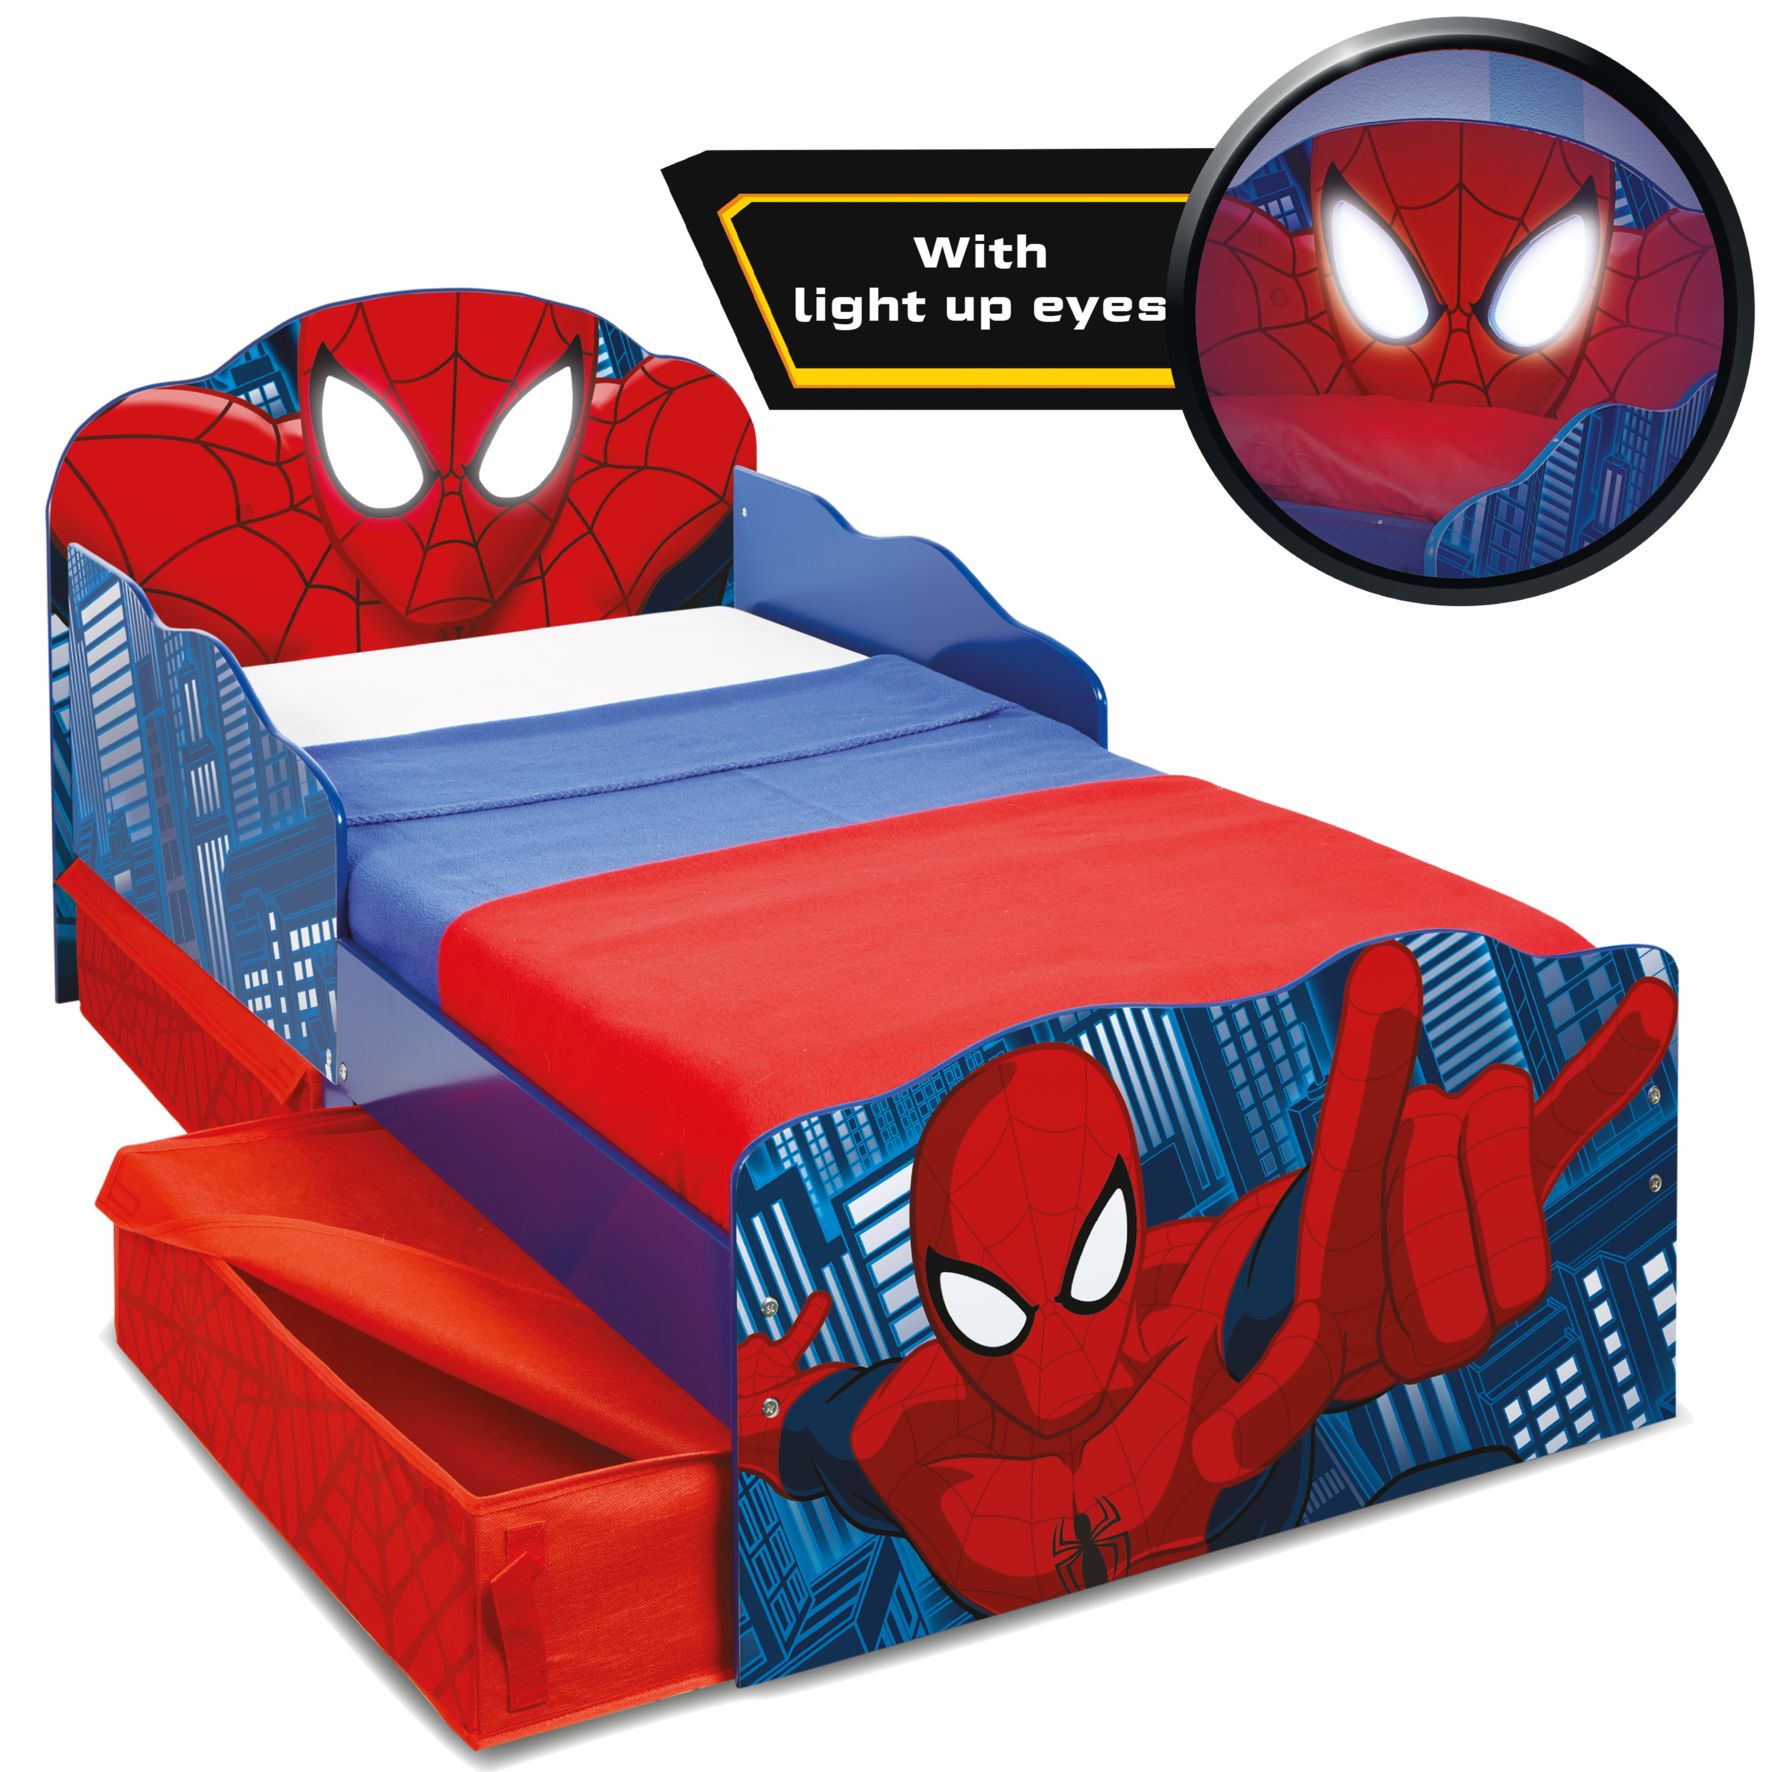 Spider-Man - Toddler Bed with light up eyes and storage (509SDR01EM)